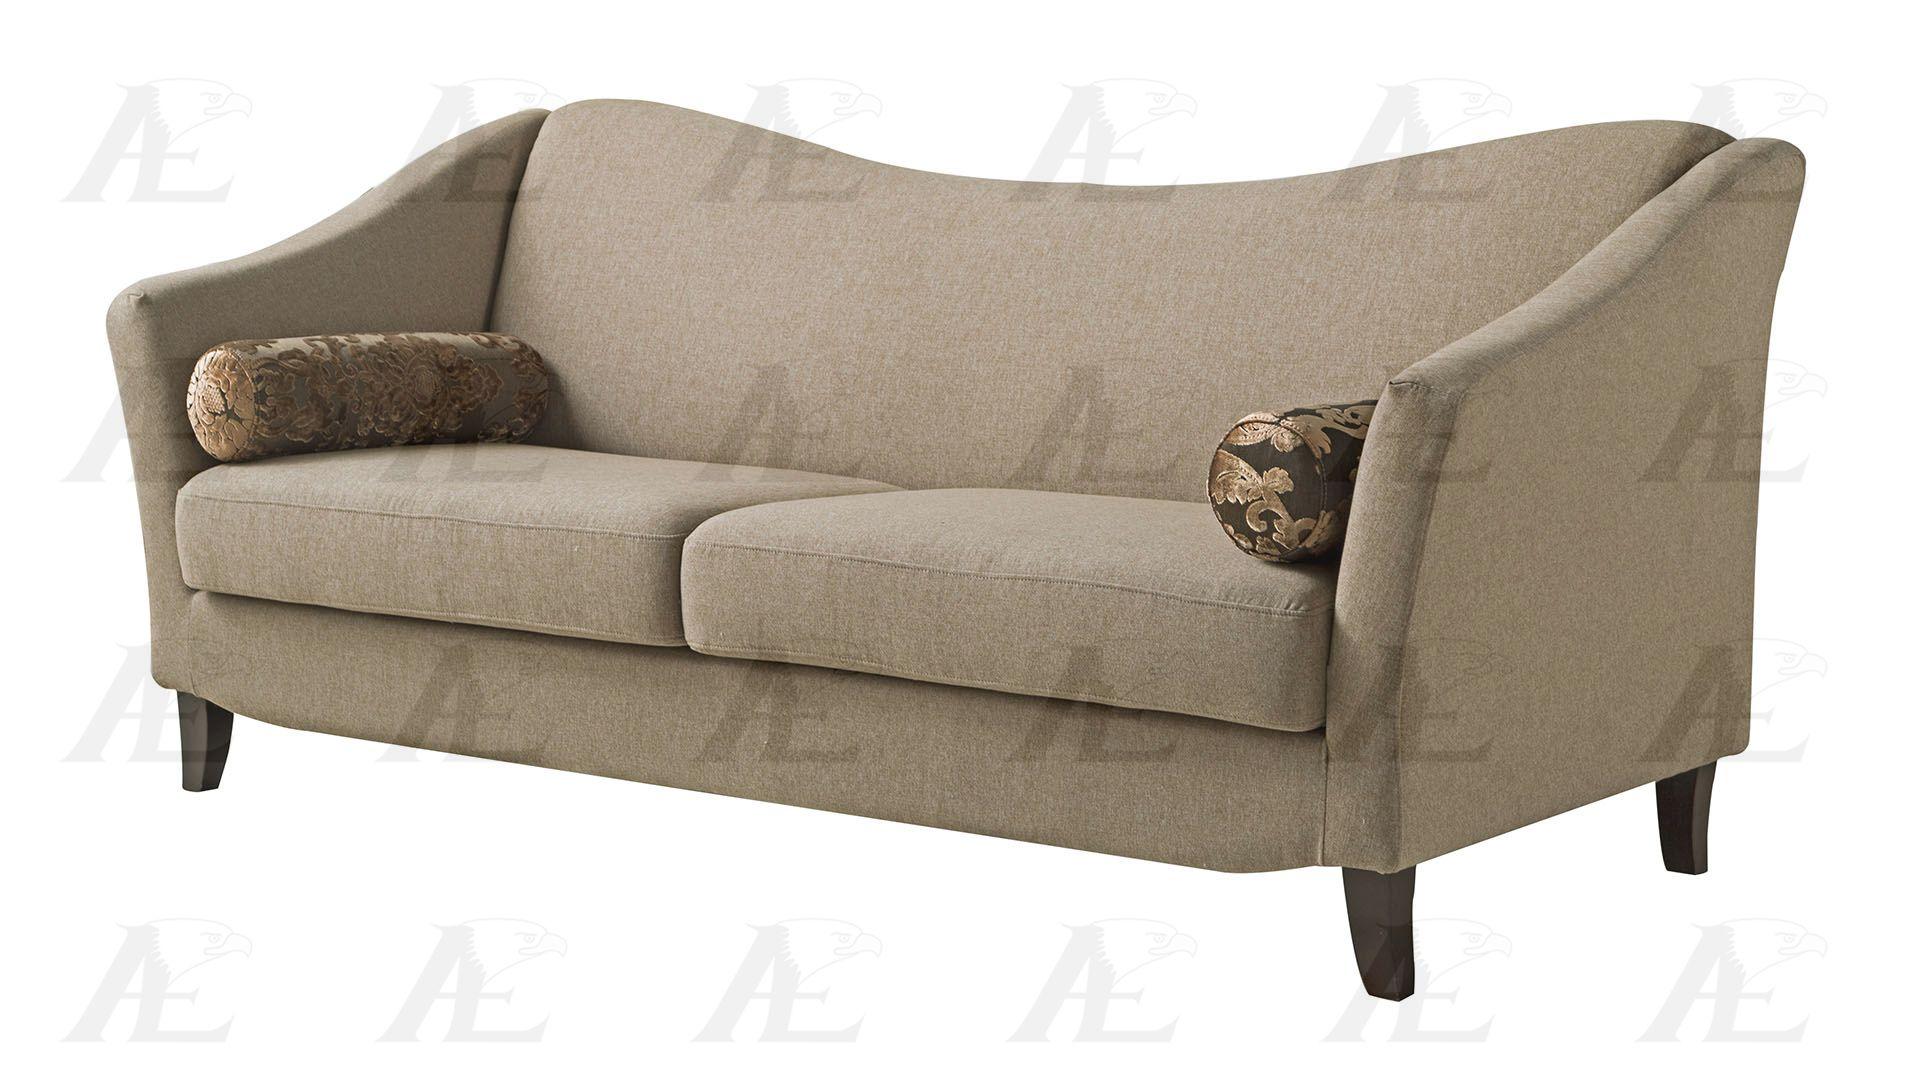 

                    
American Eagle Furniture AE2371 Sofa and Loveseat Set Tan Fabric Purchase 
